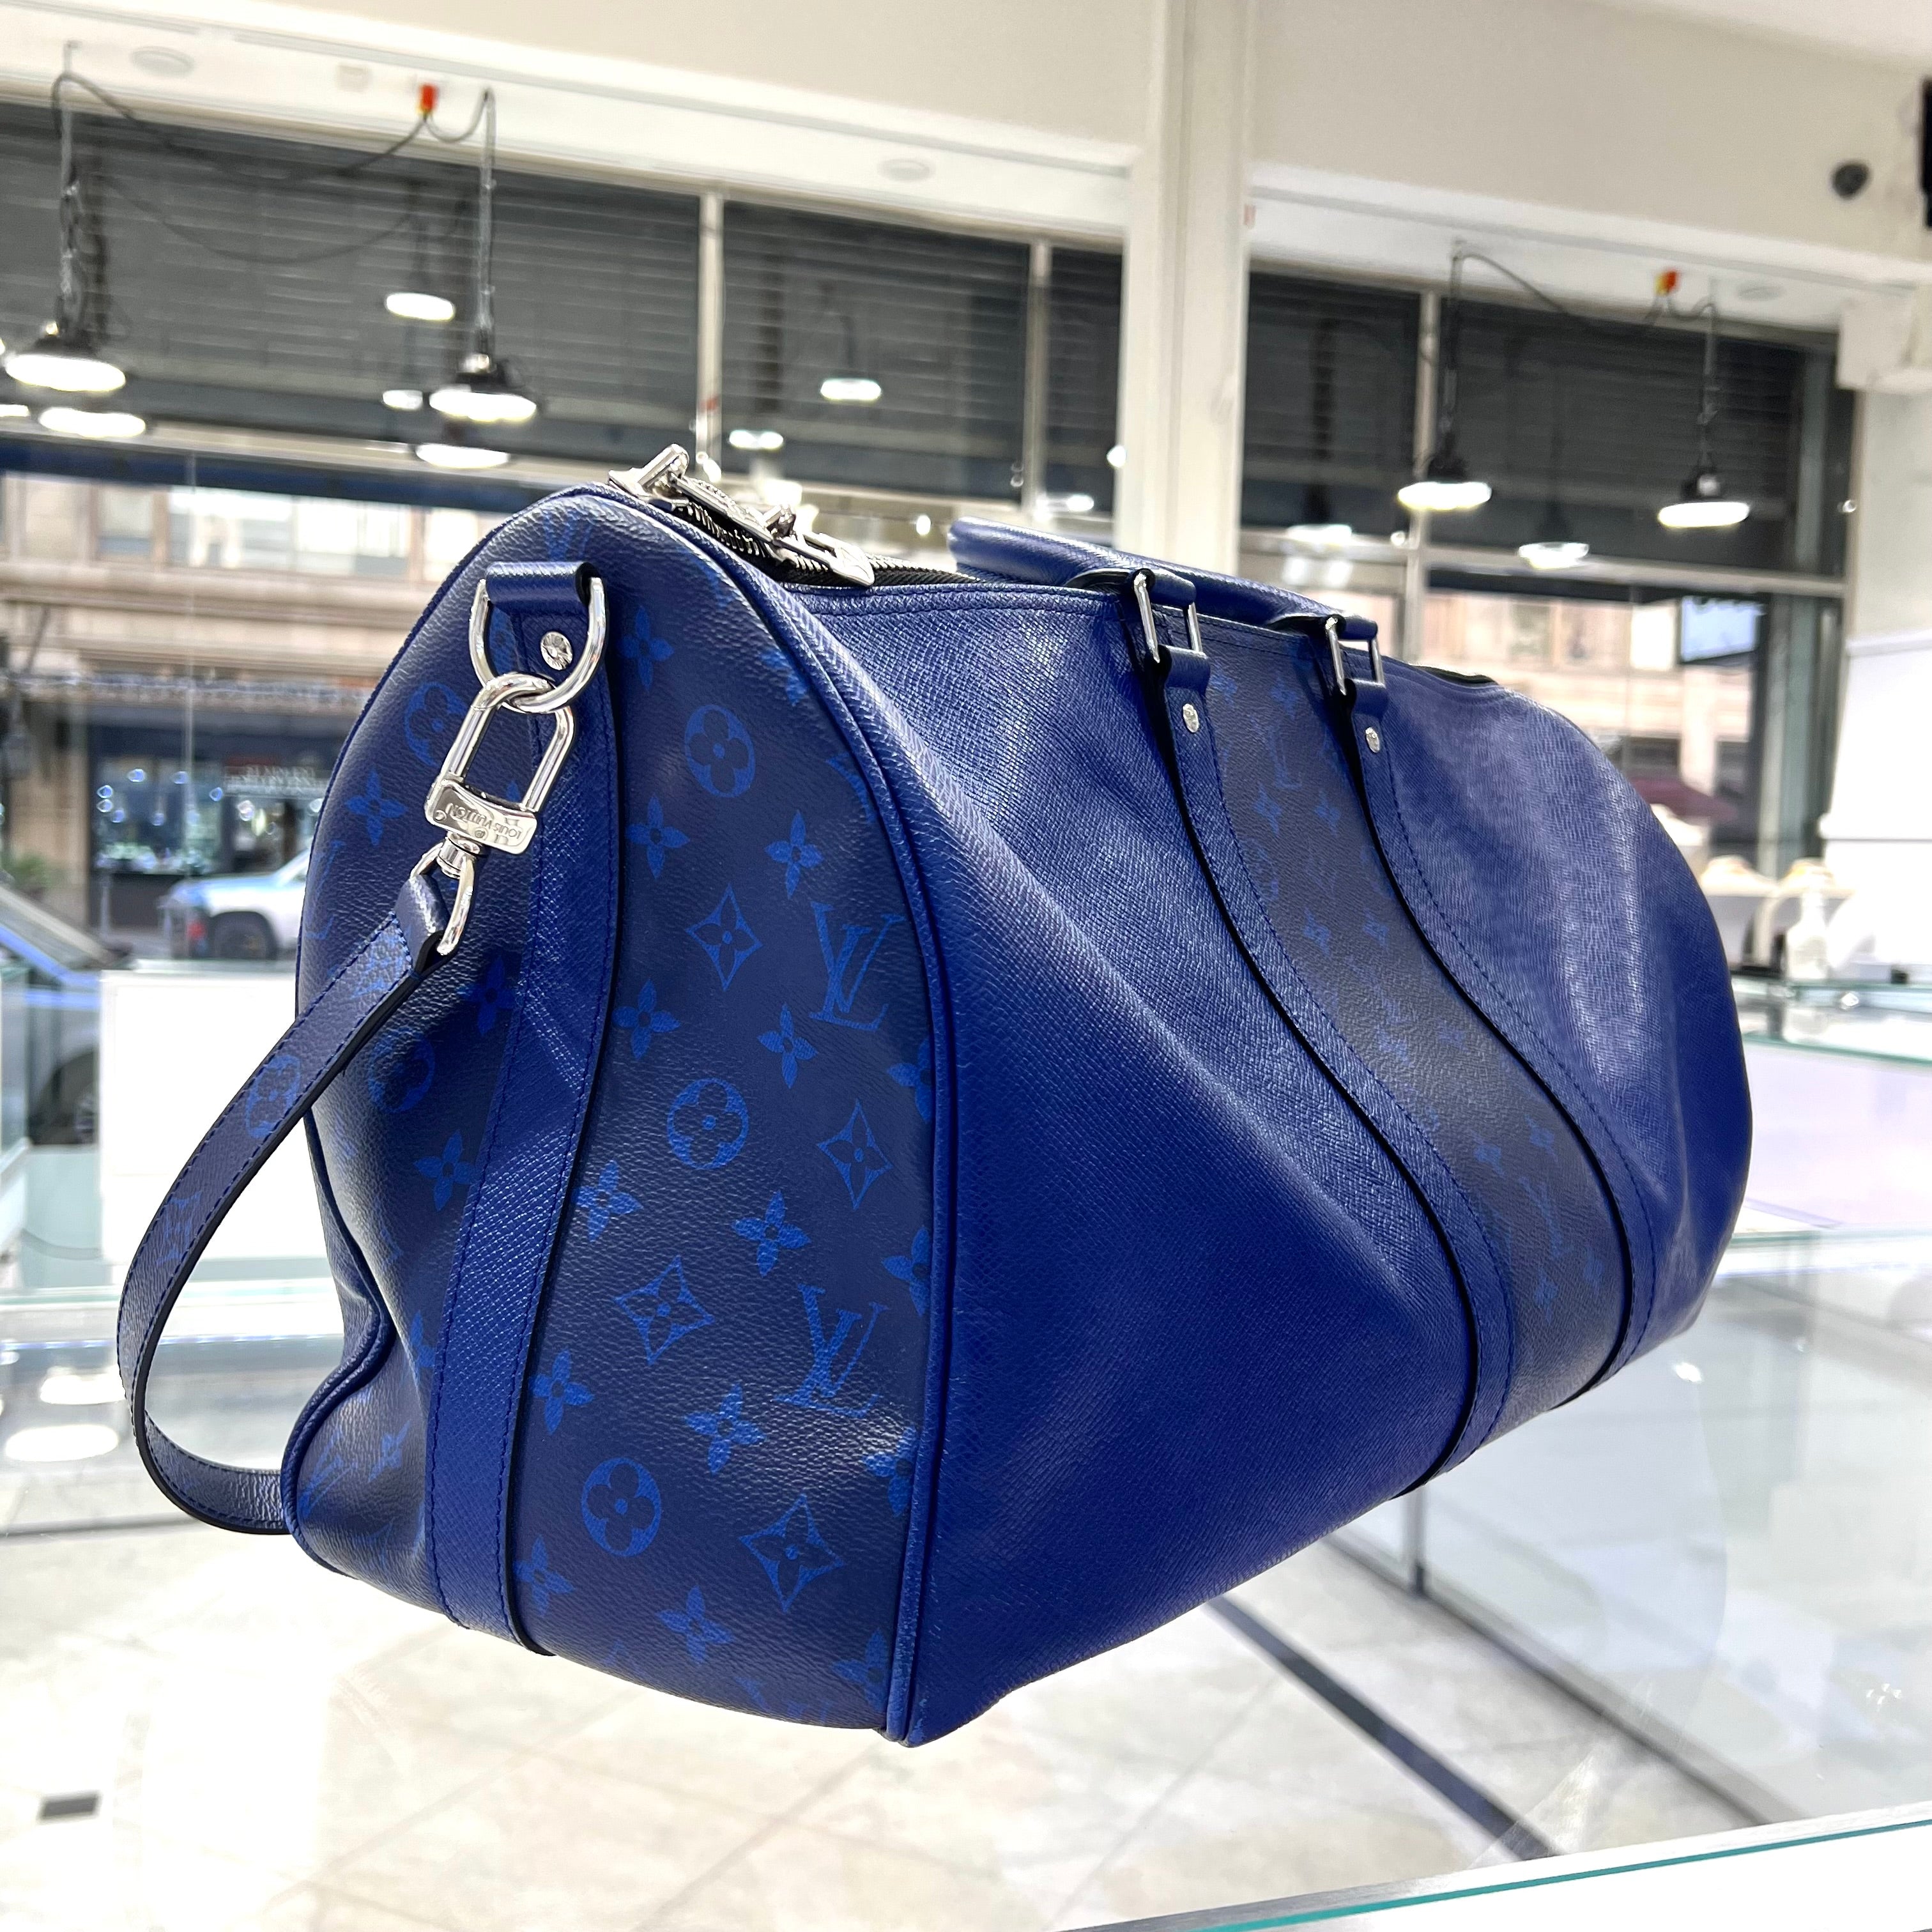 Blue on Blue Louis Vuitton Duffle Bag